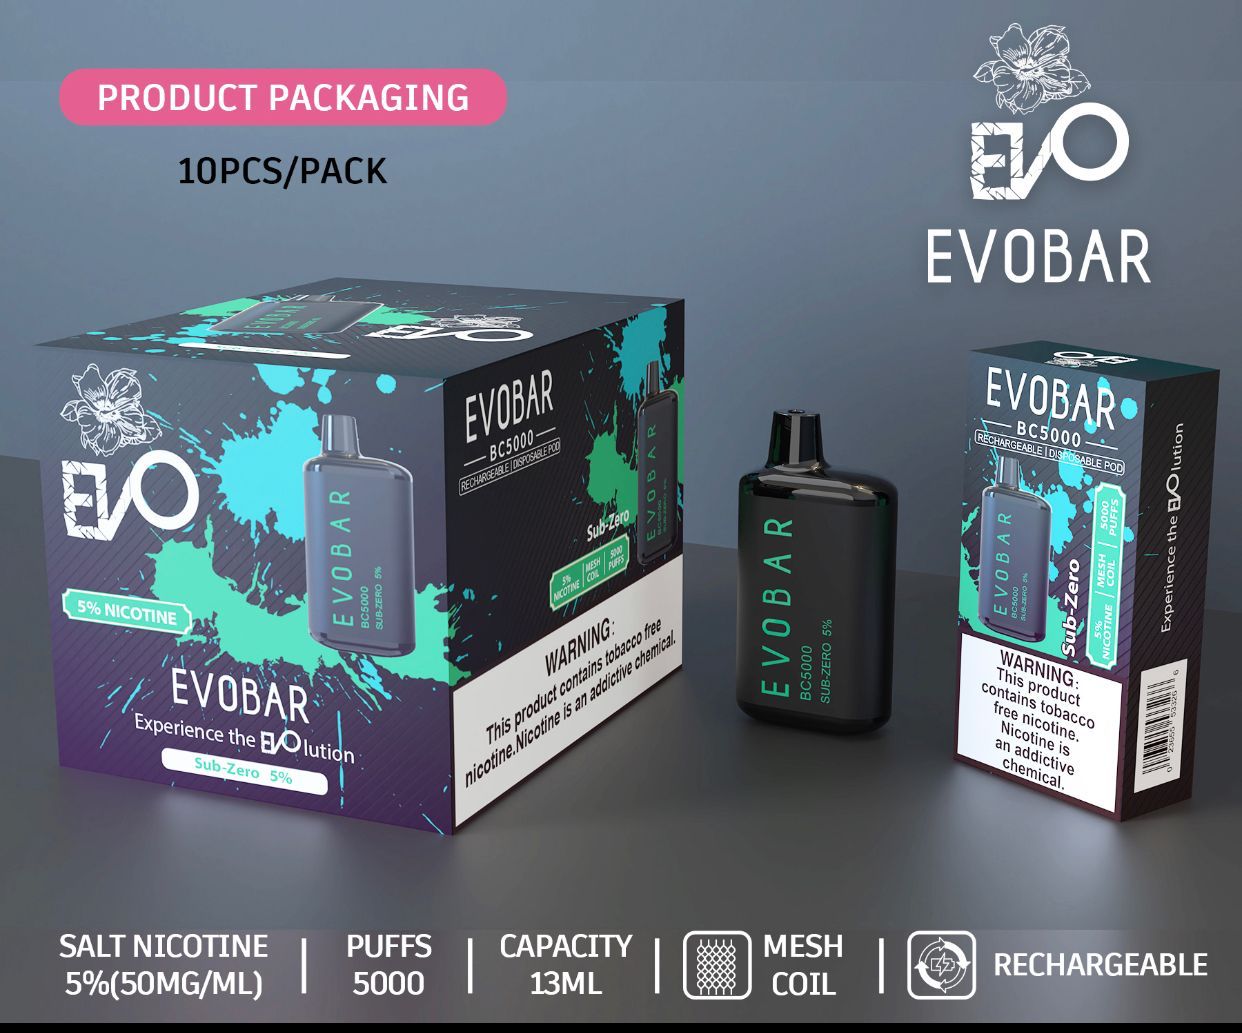 EVOBAR sub-zero 10 pack